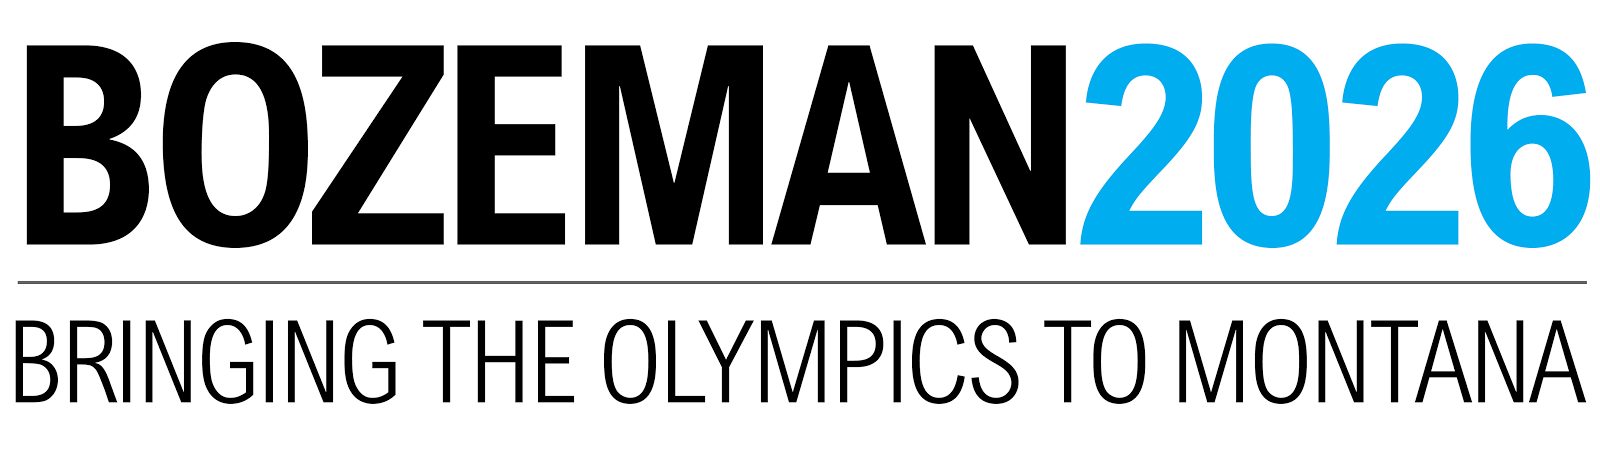 Bozeman 2026 Winter Olympics